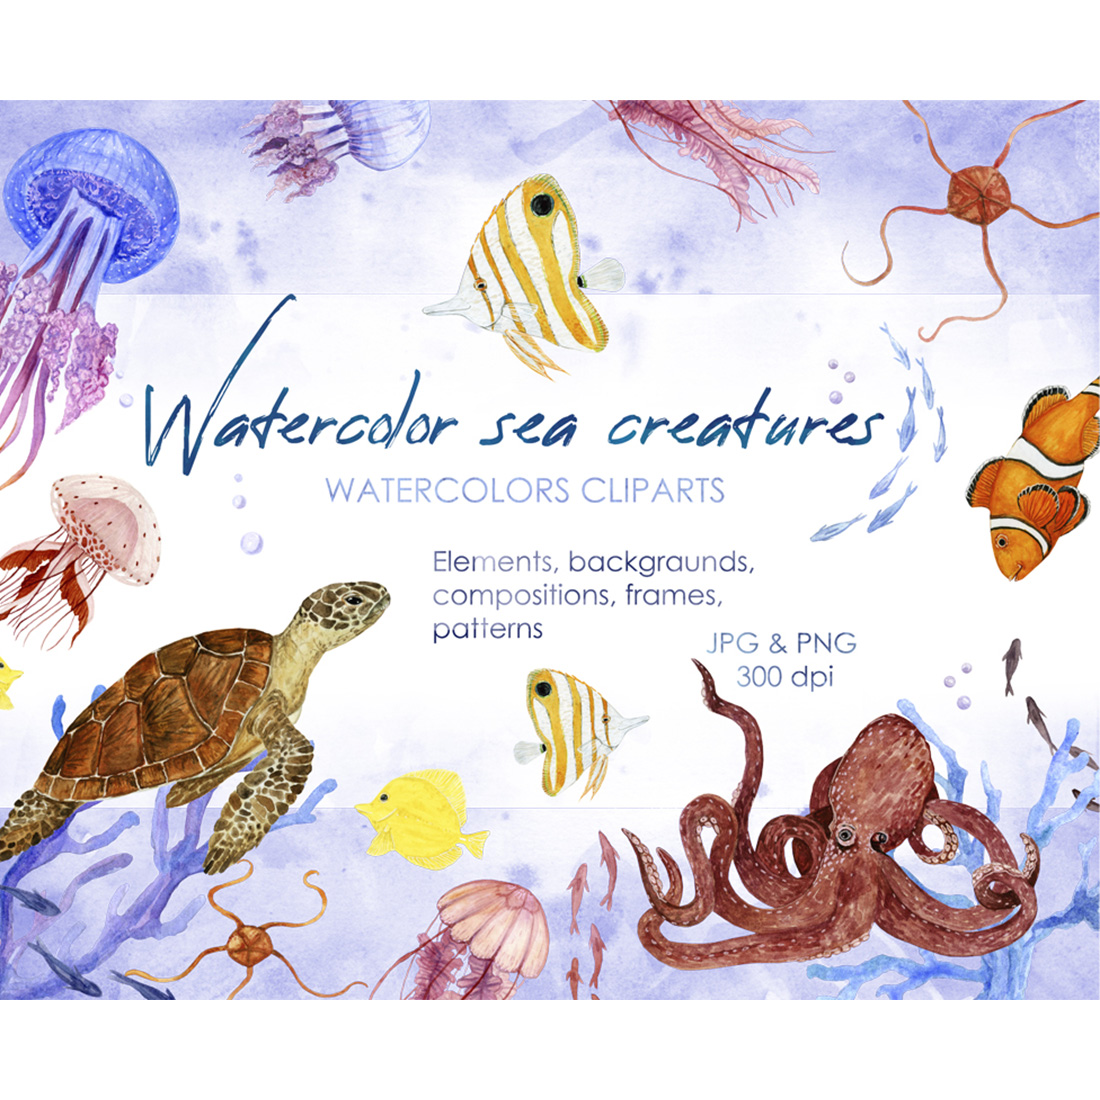 Watercolor Sea Creatures Clipart cover.